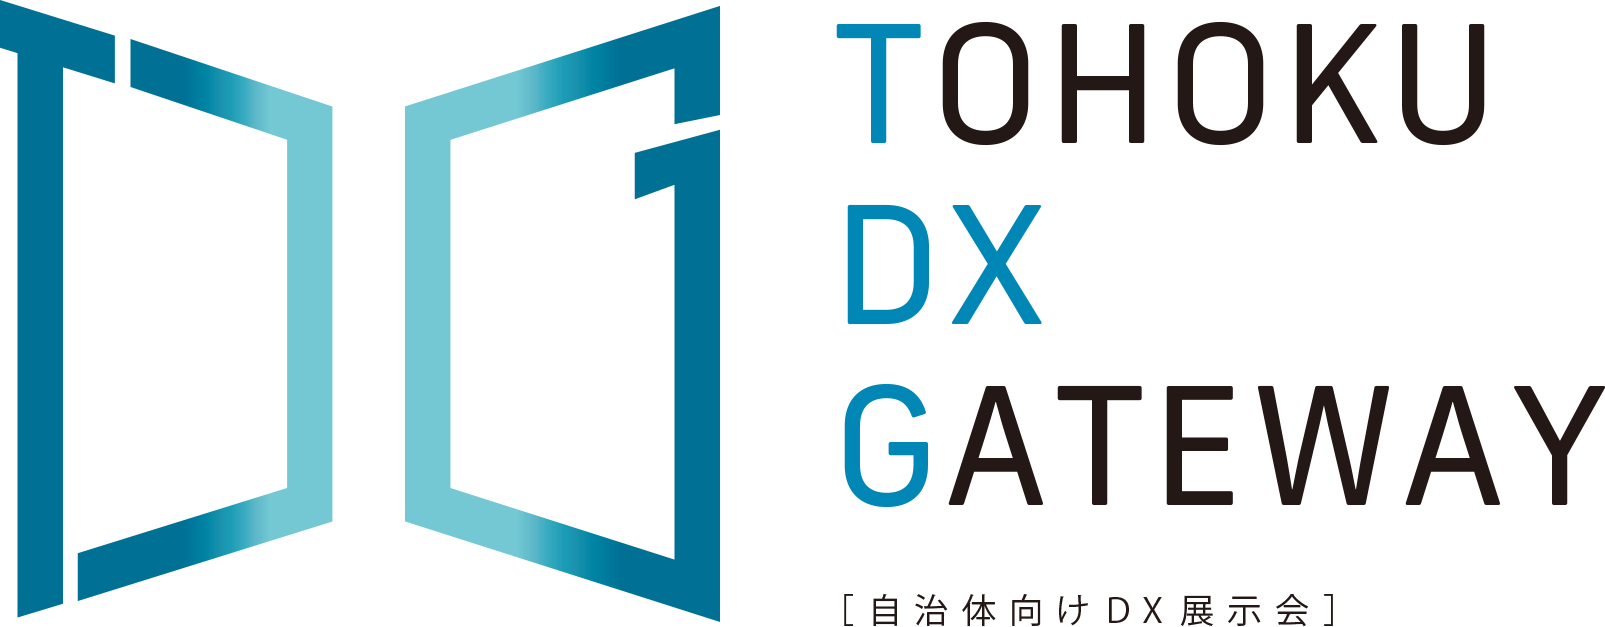 TOHOKU DX GATEWAY